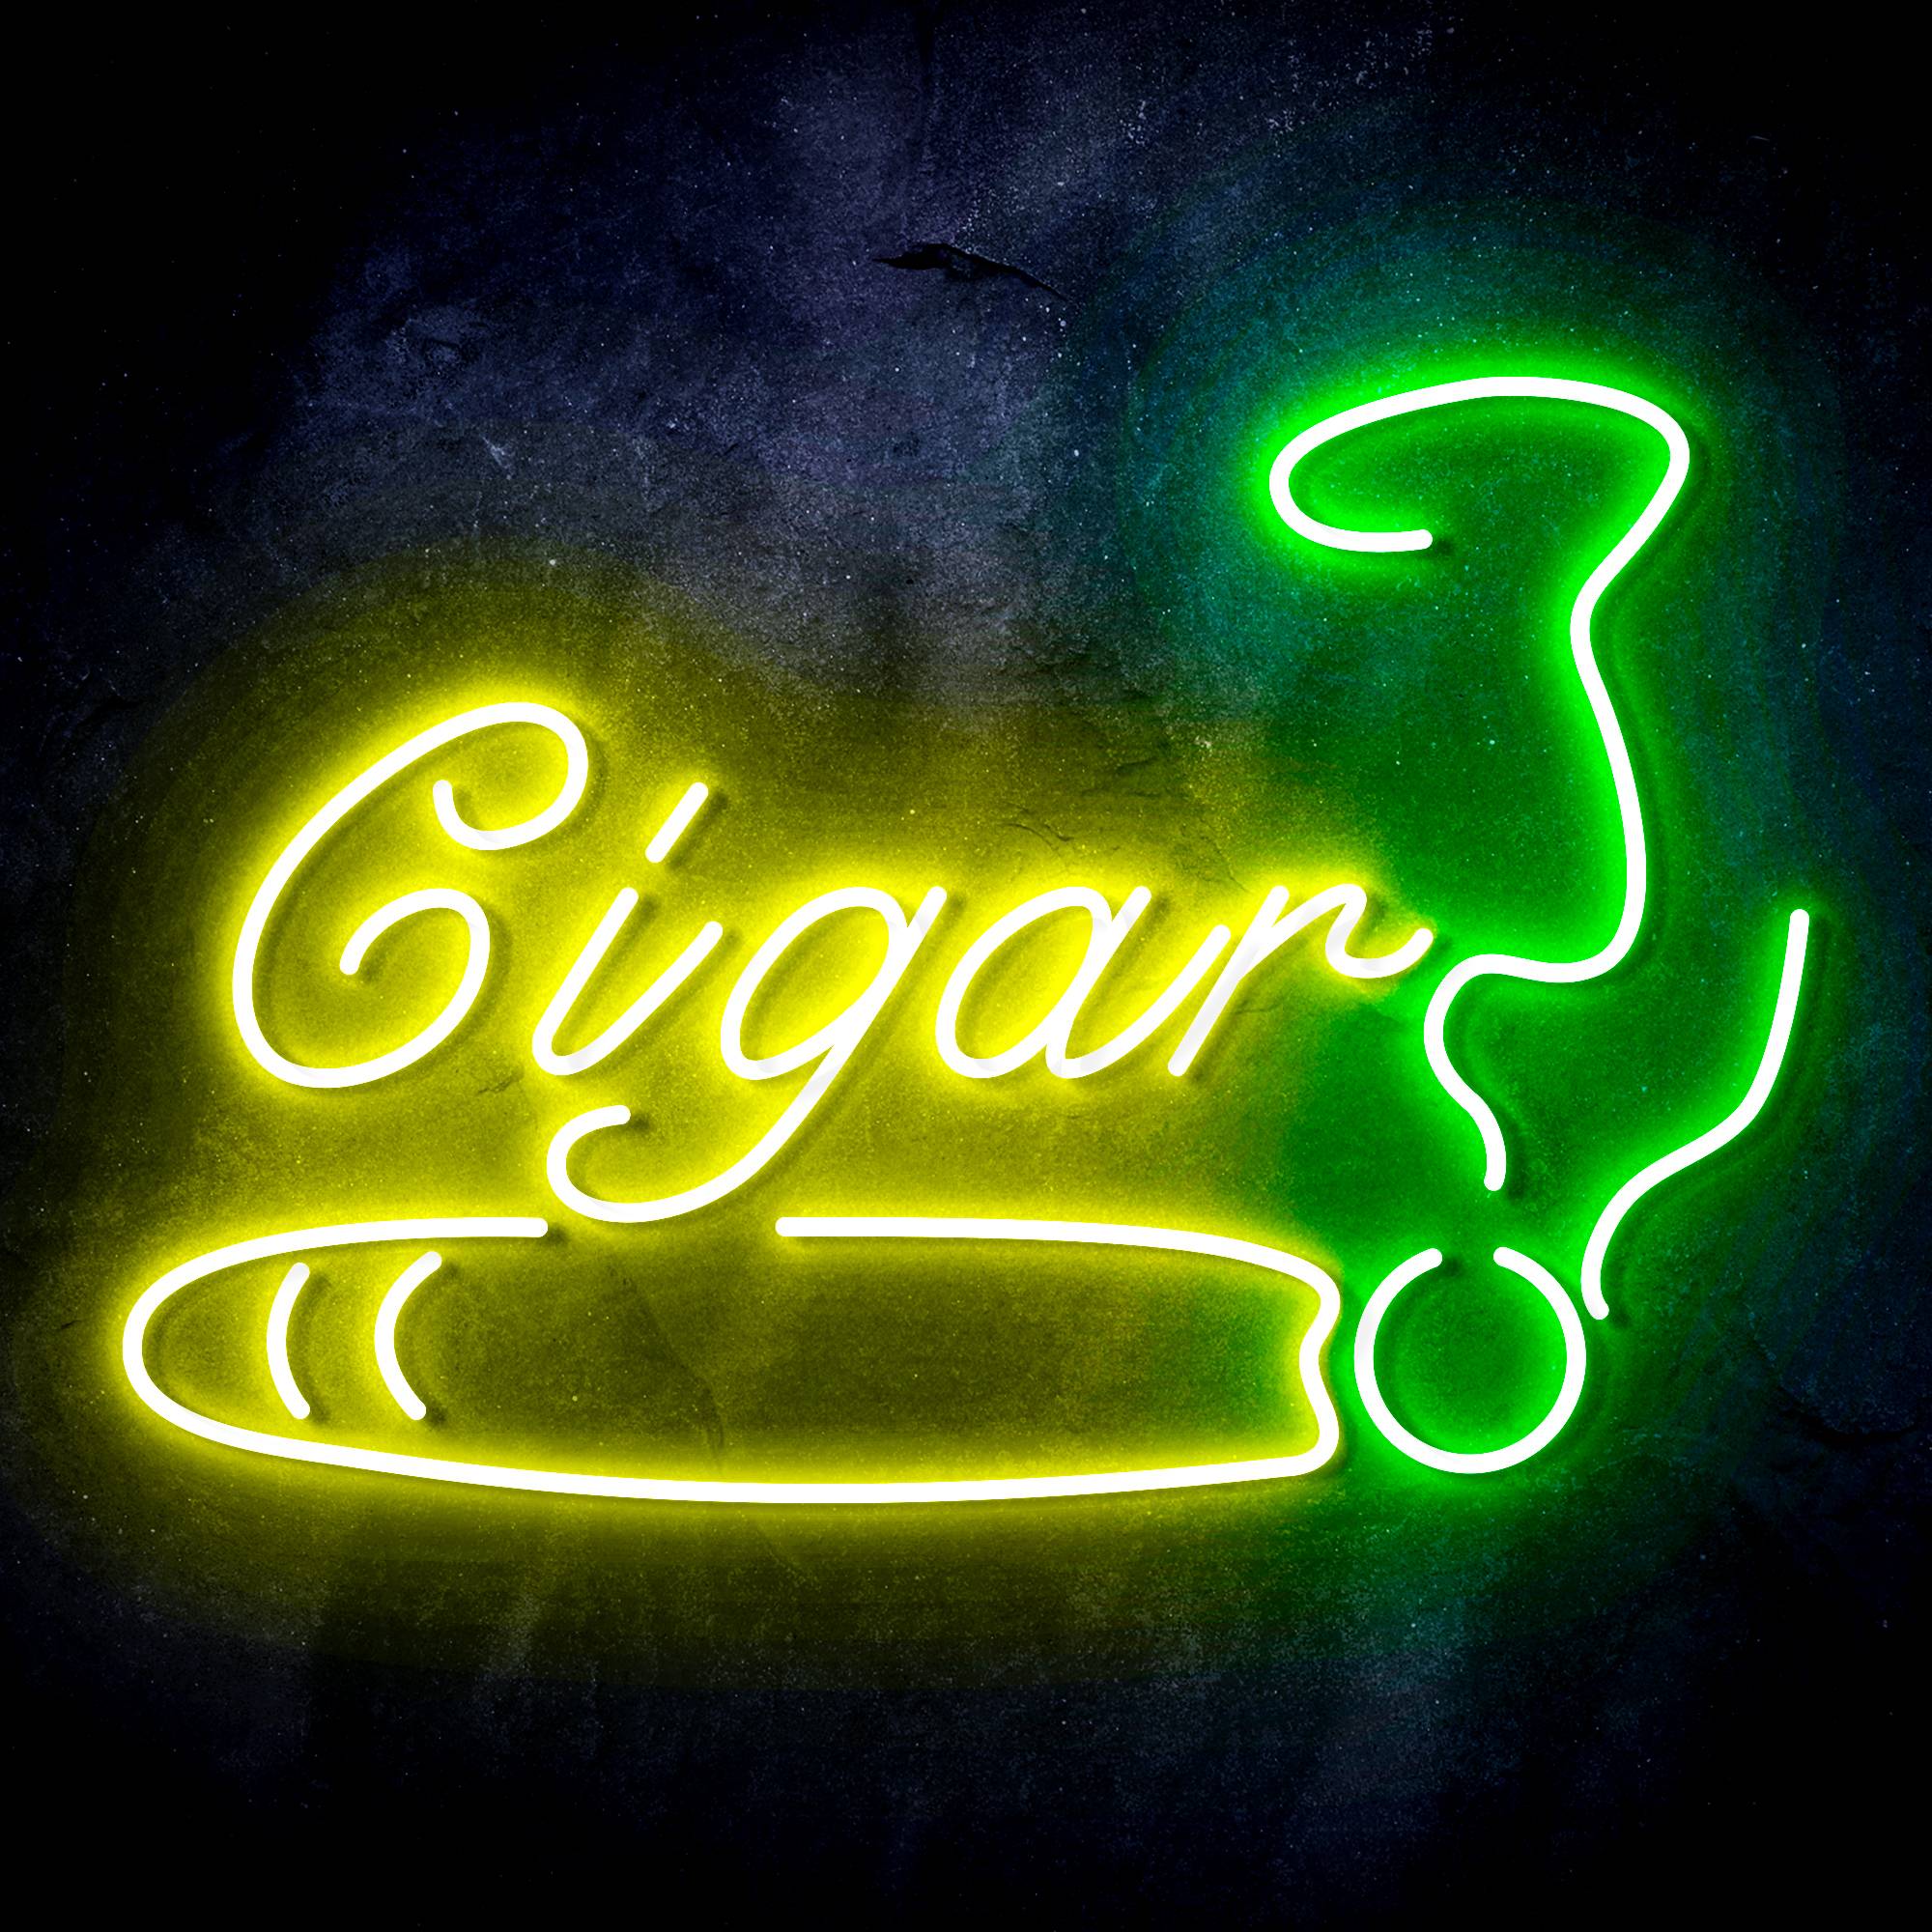 Cigarette Ciga Pipes LED Neon Sign